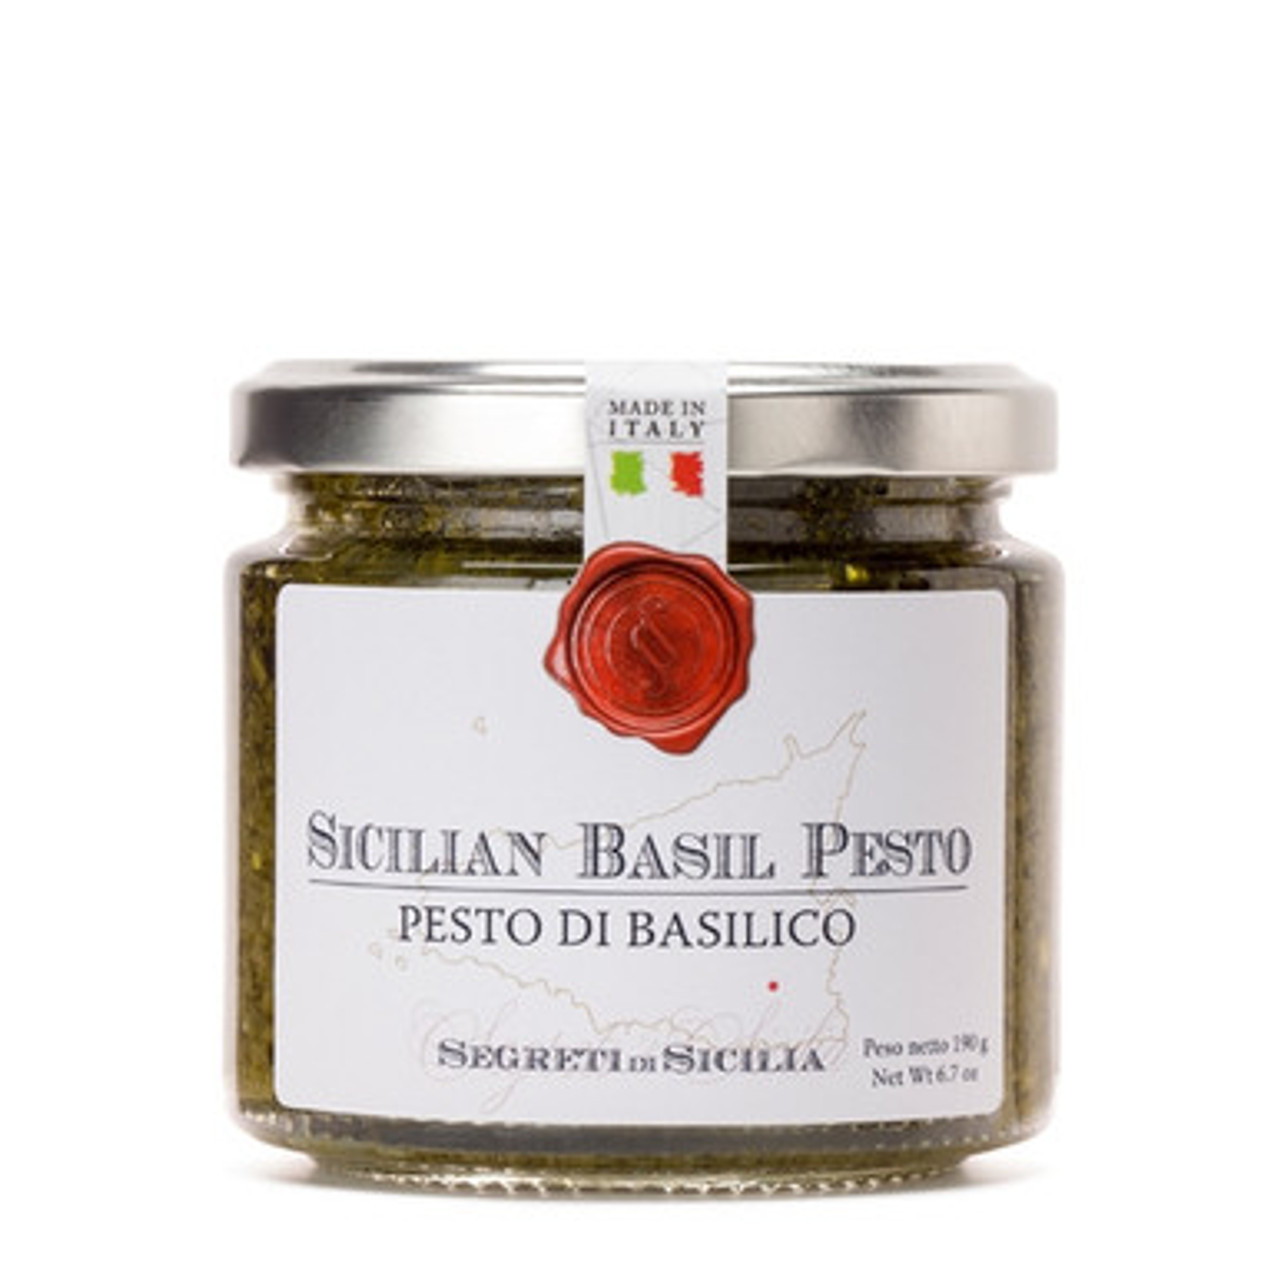 Sicilian Basil Pesto